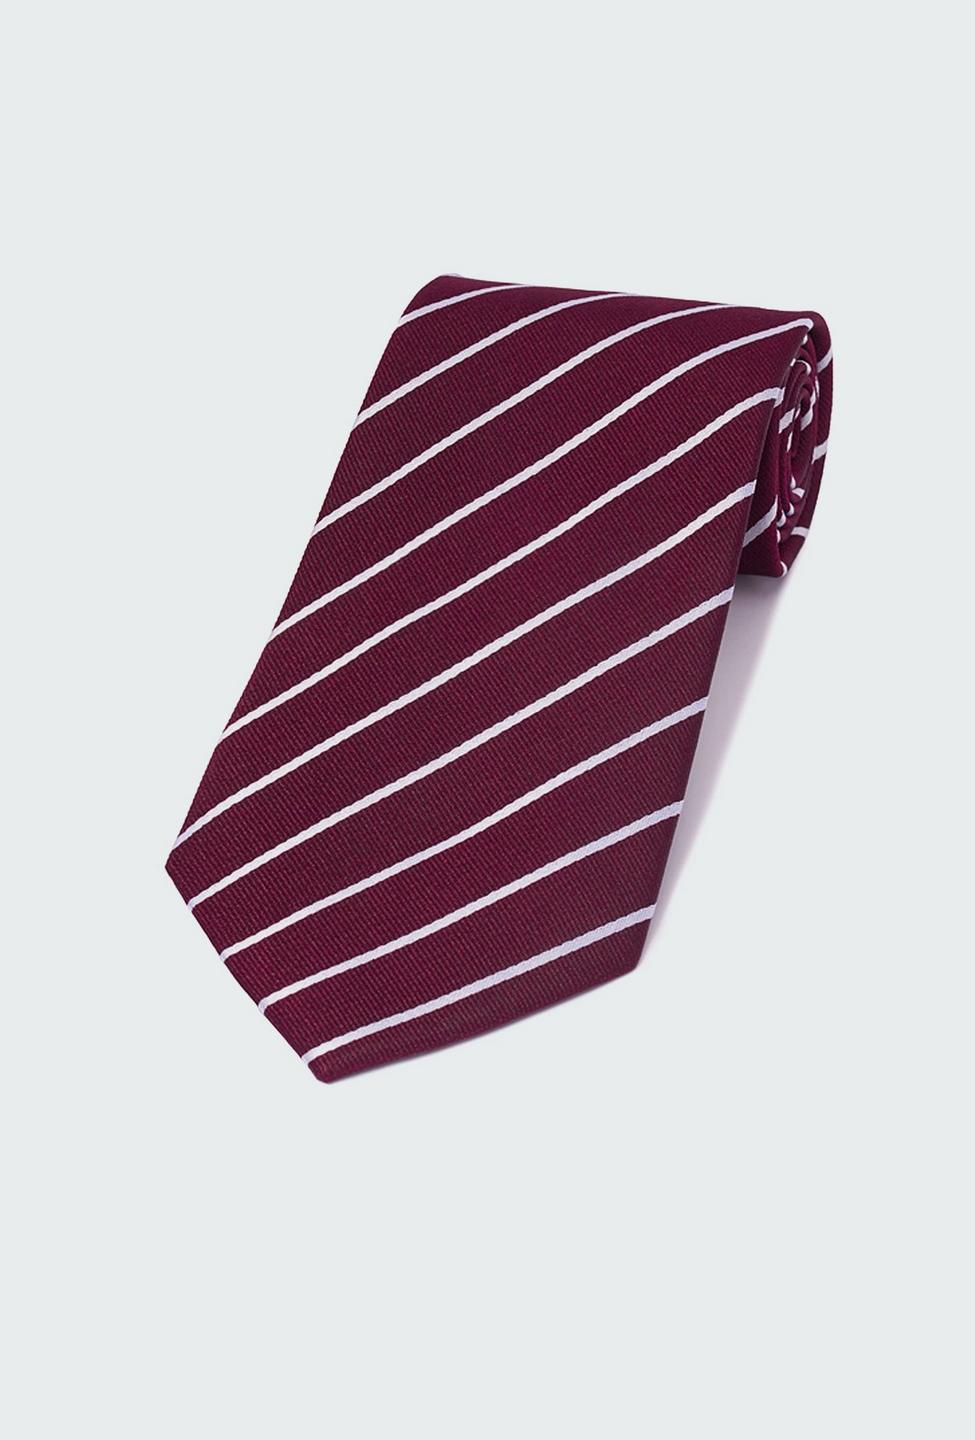 Burgundy Stripe Tie